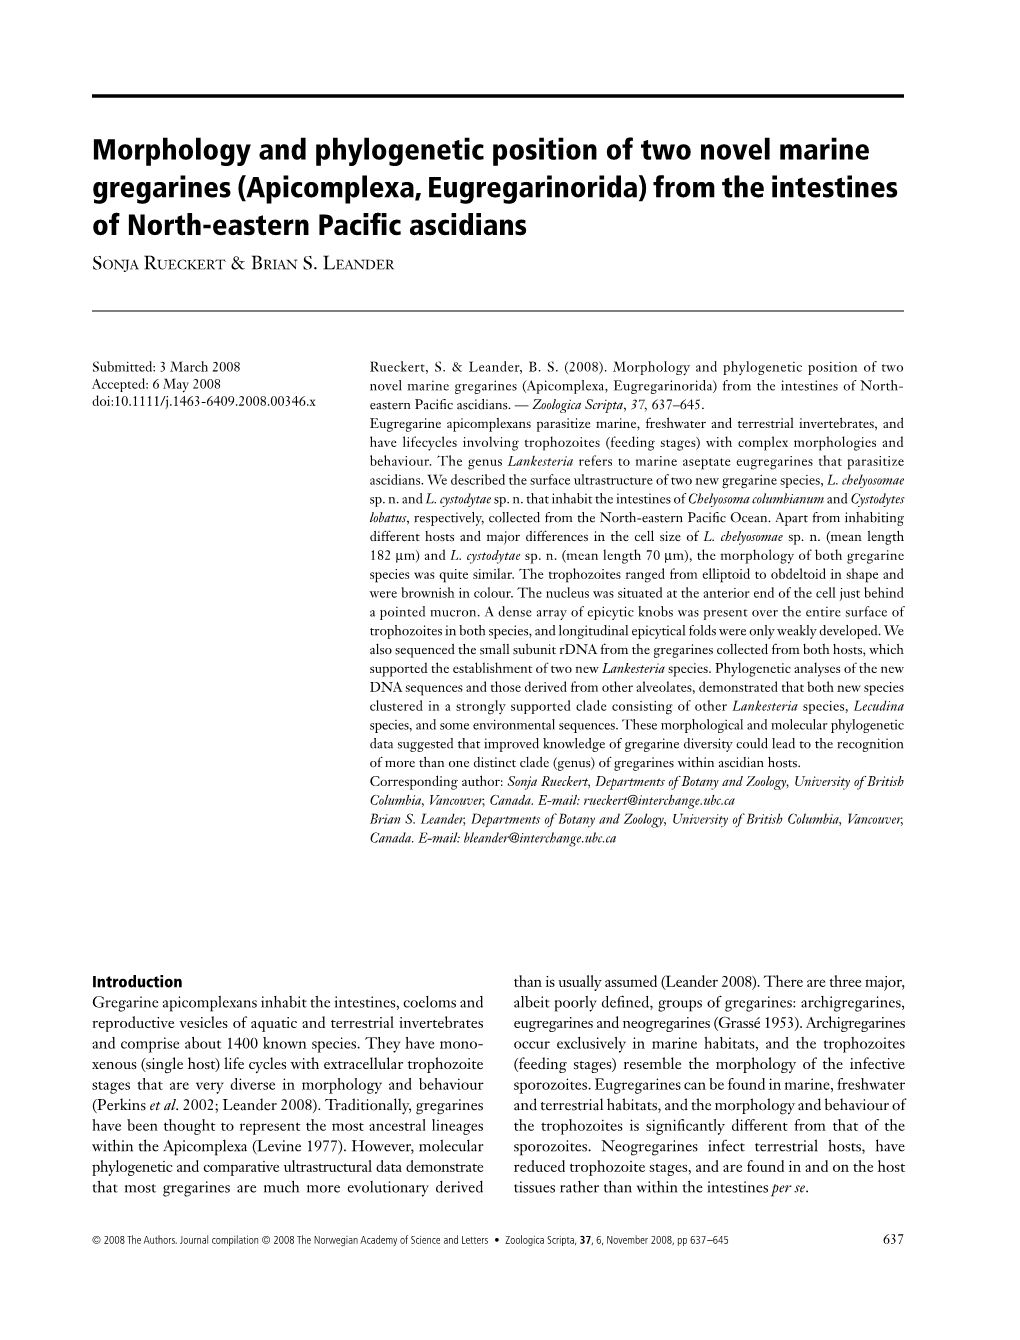 Morphology and Phylogenetic Position of Two Novel Marine